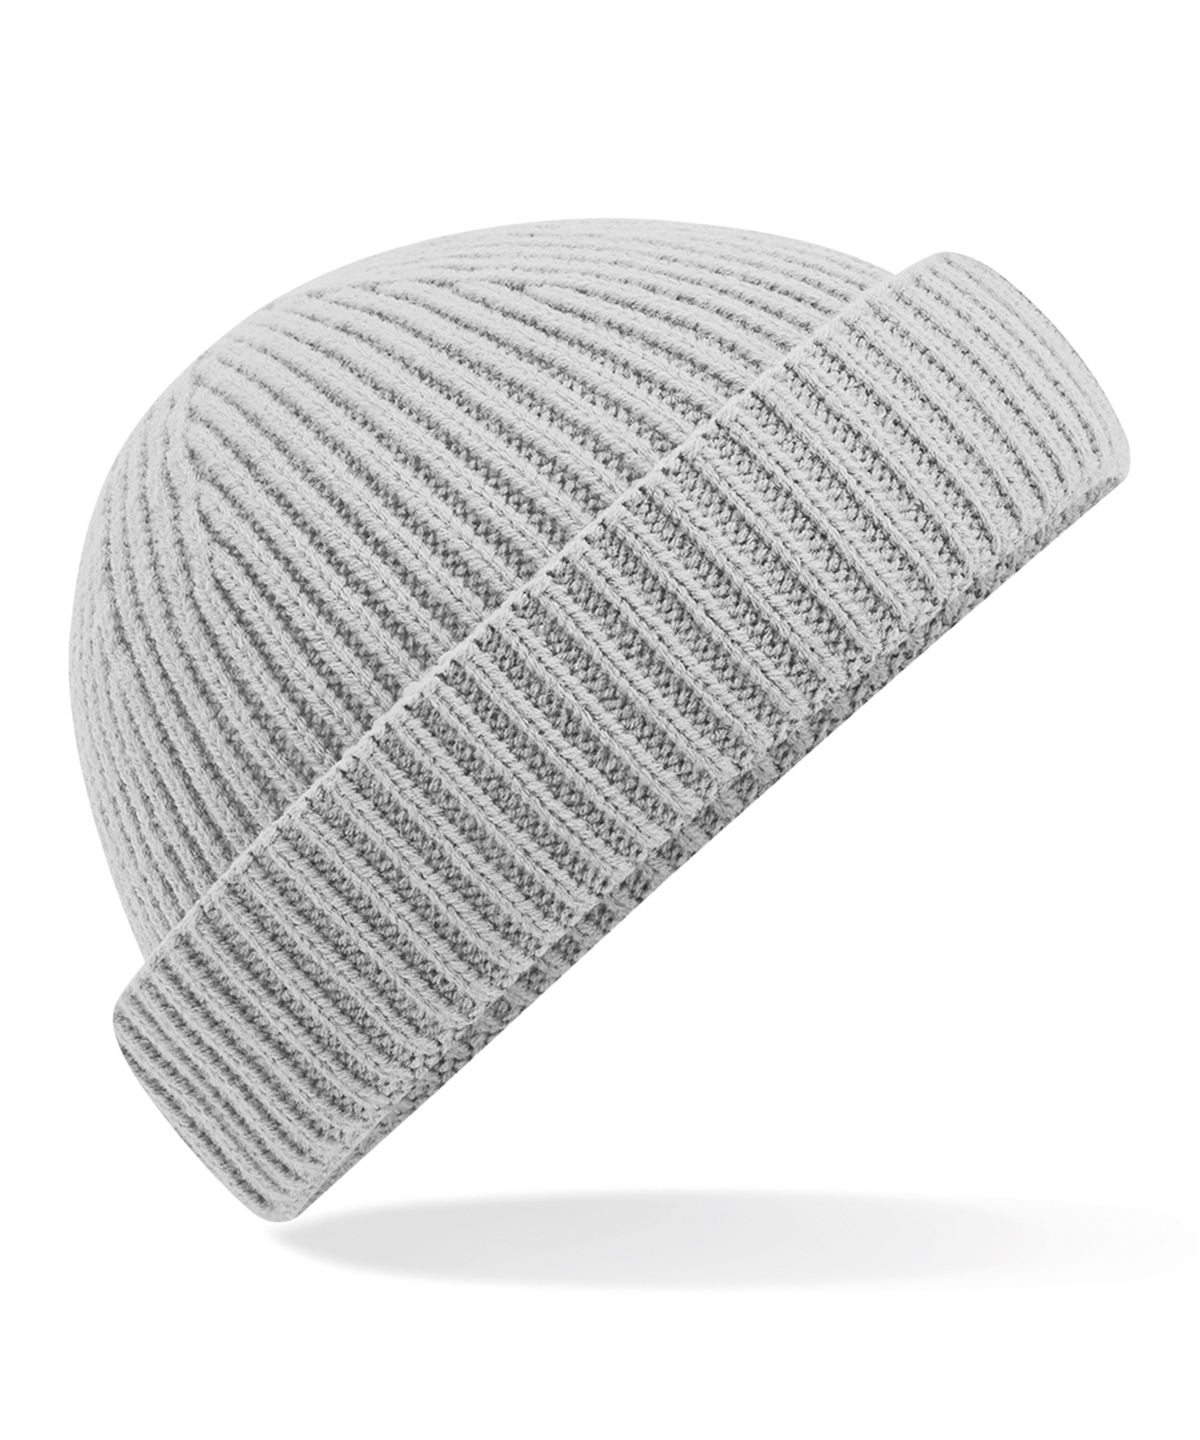 Personalised Hats - Light Grey Beechfield Harbour beanie